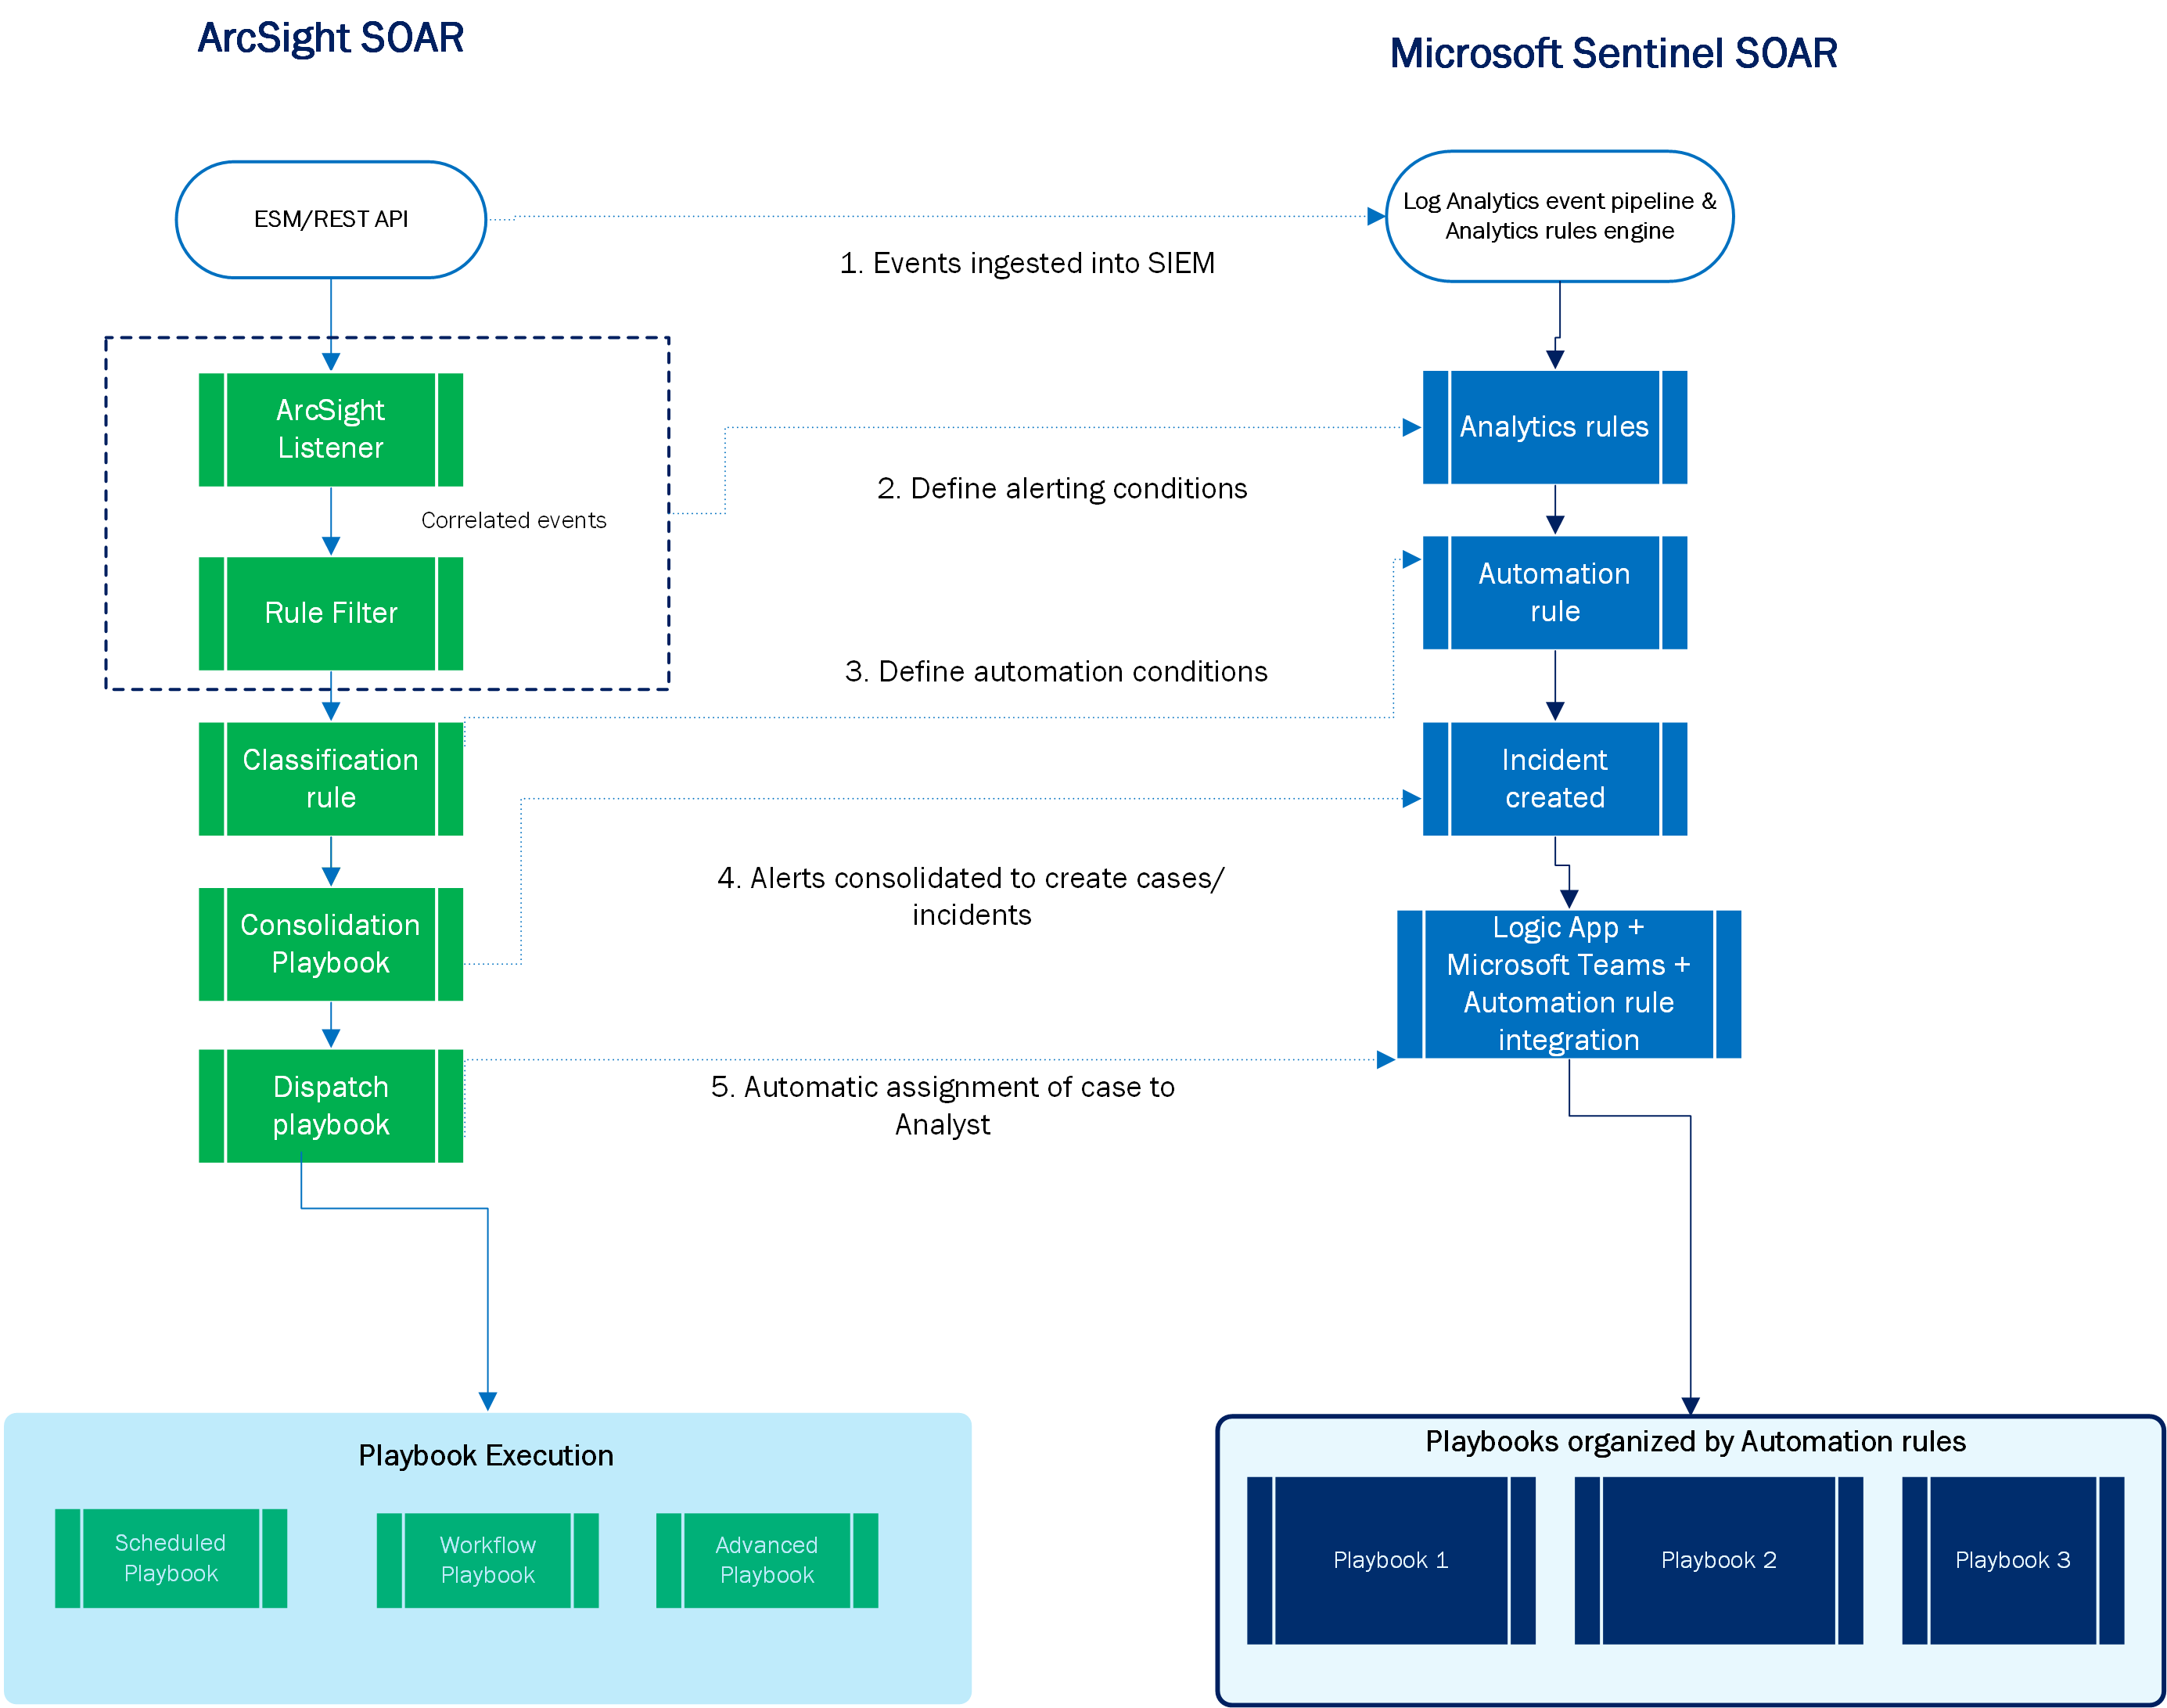 显示 ArcSight 和 Microsoft Sentinel SOAR 工作流的关系图。